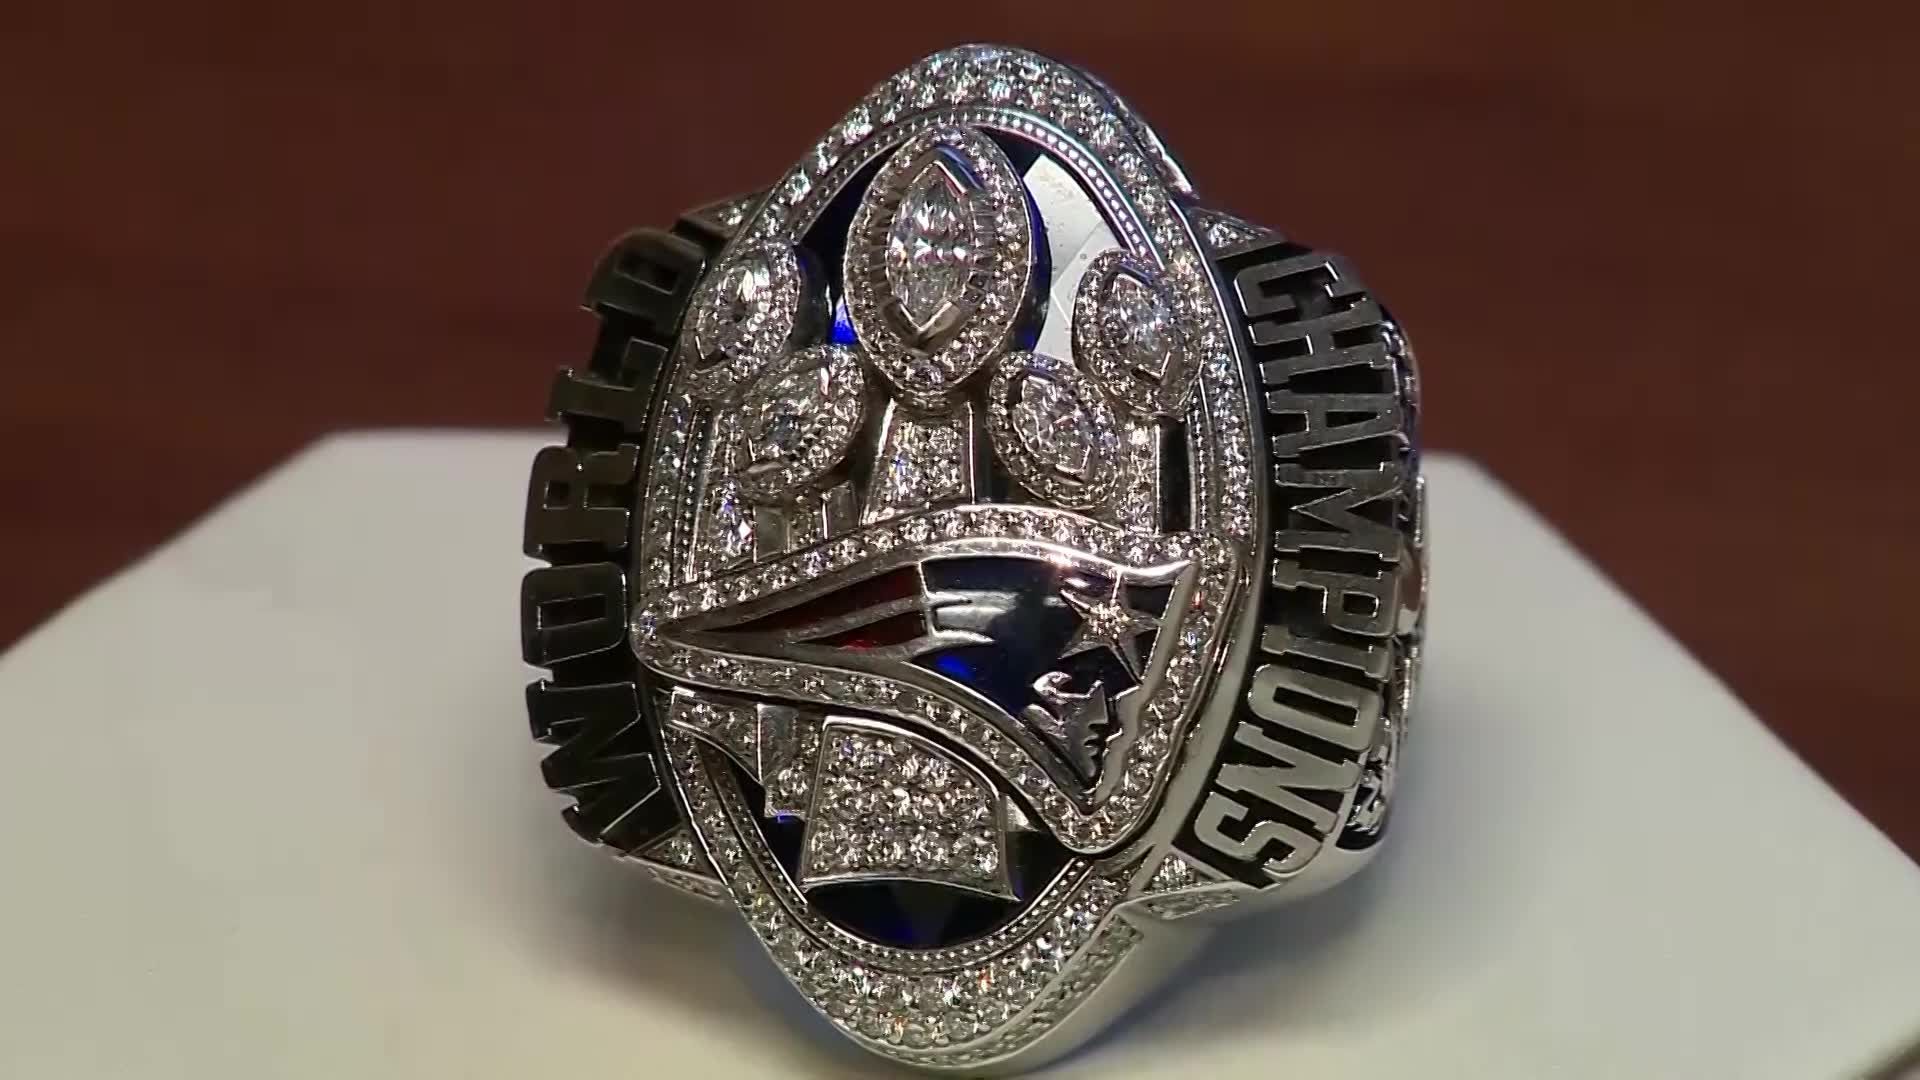 Patriots Foundation to raffle off Super Bowl LIII championship ring